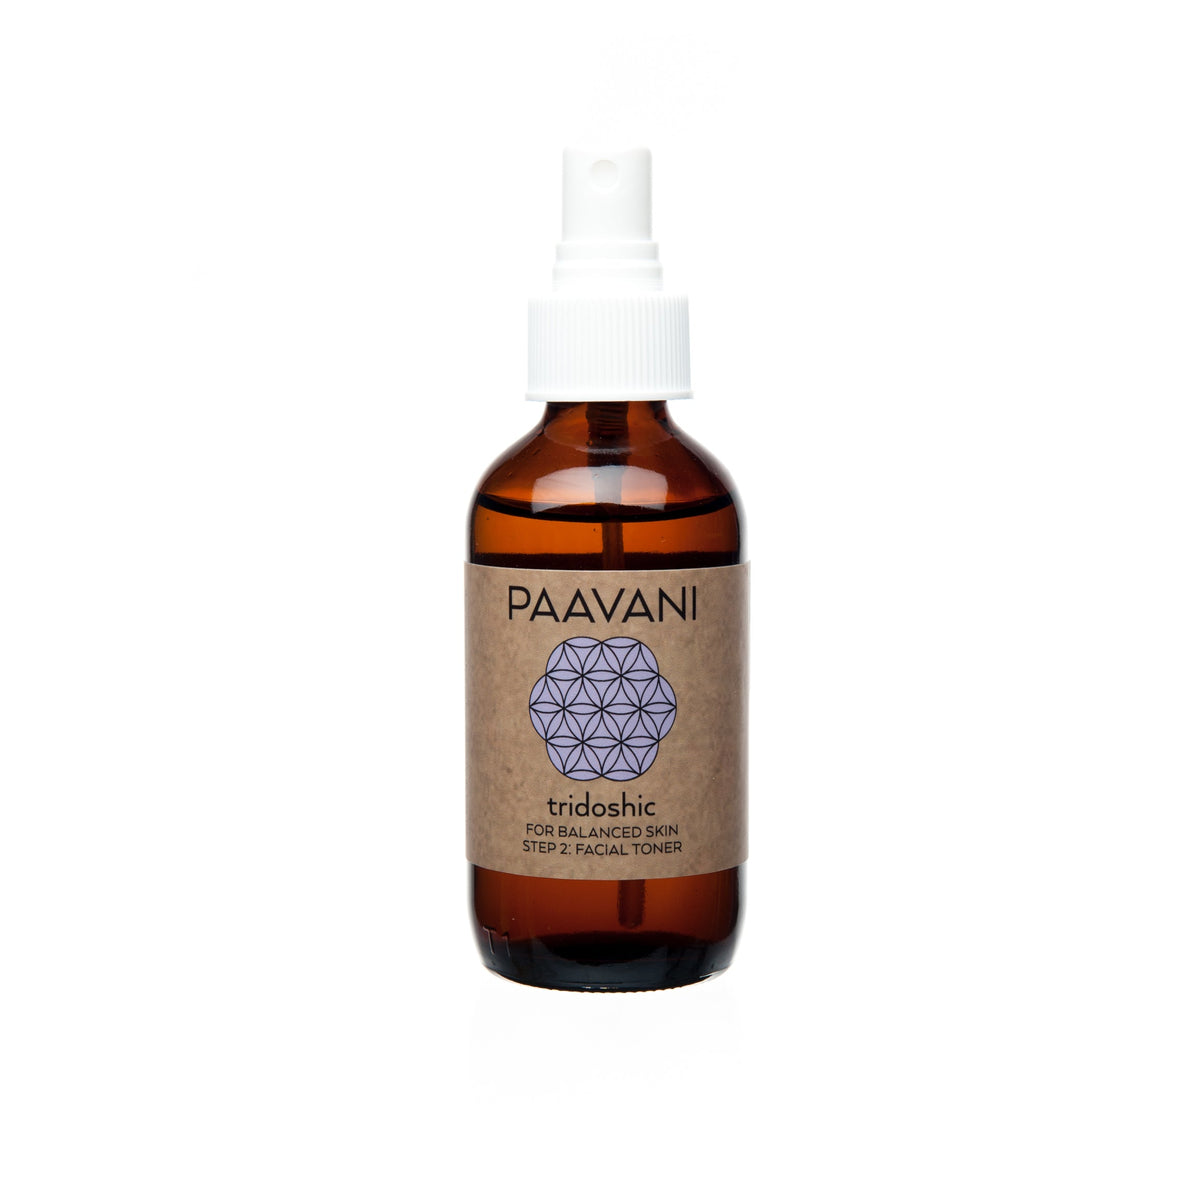 * Paavani Ayurveda - Organic Tridoshic Toner for Balanced Skin with Calendula & Lavender, Calming and Restoring Skin 4 fl oz.-0